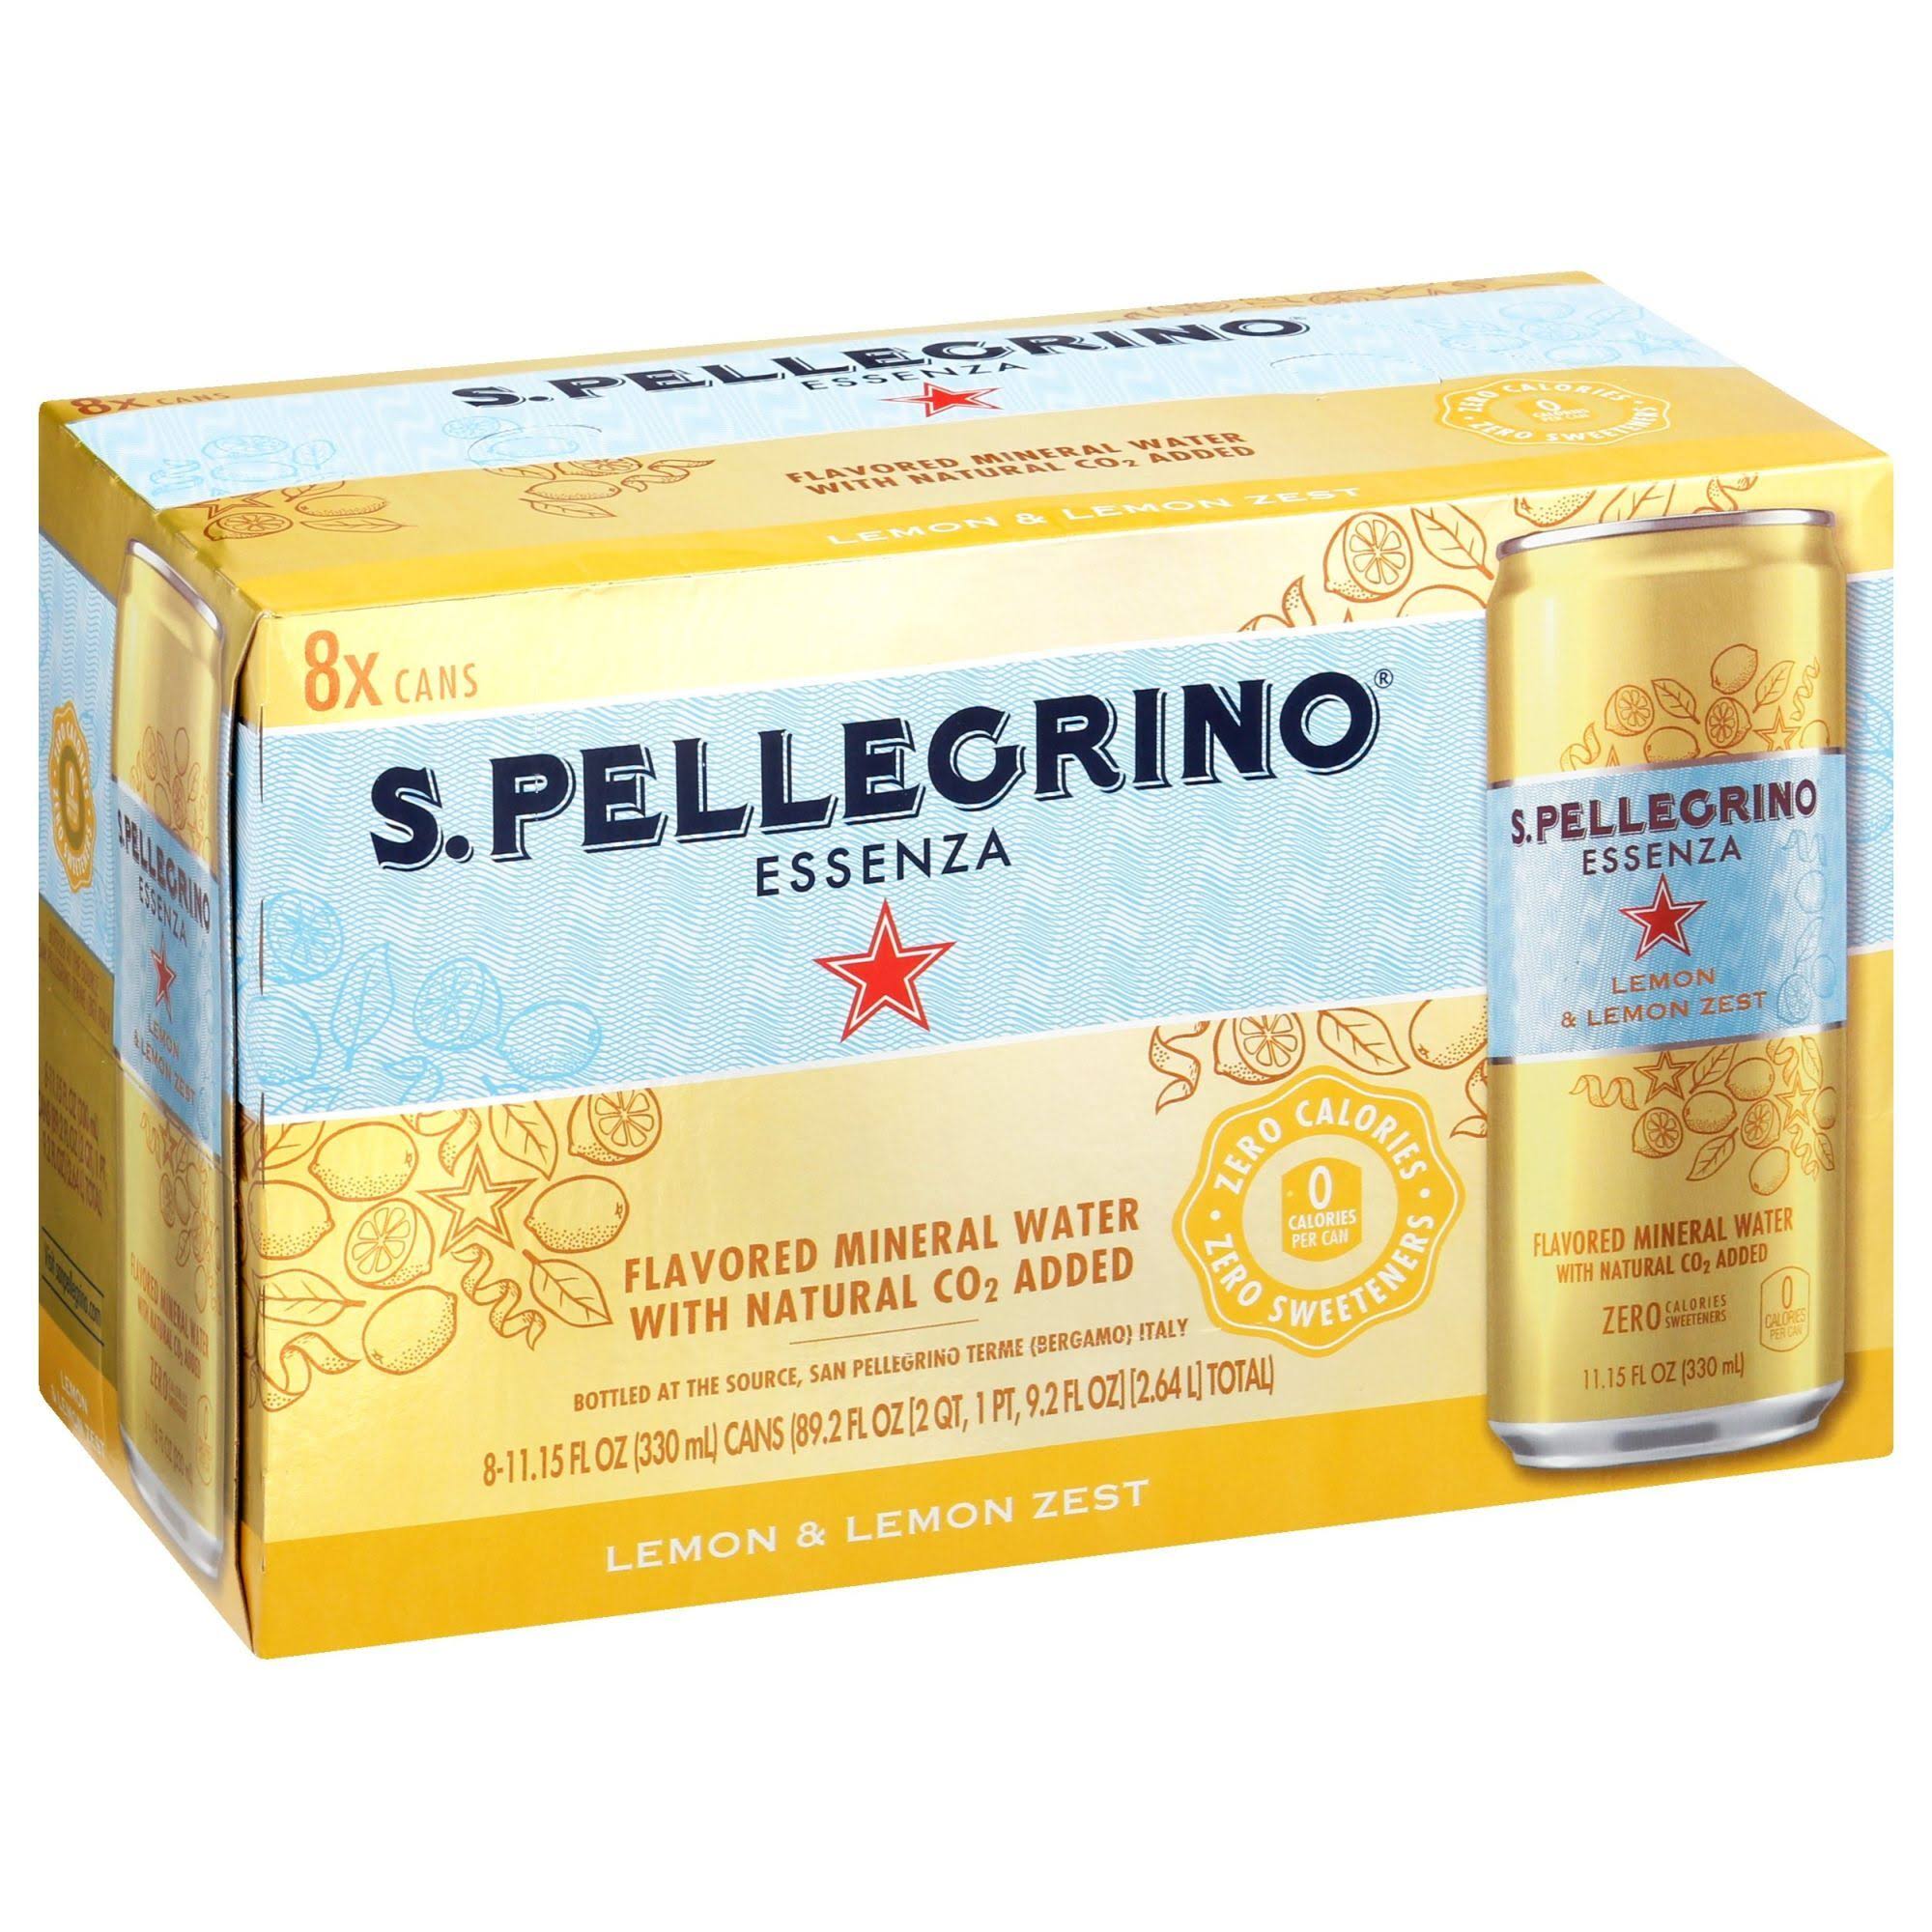 S. Pellegrino Mineral Water, Lemon & Lemon Zest Flavored - 8 pack, 11.15 fl oz cans